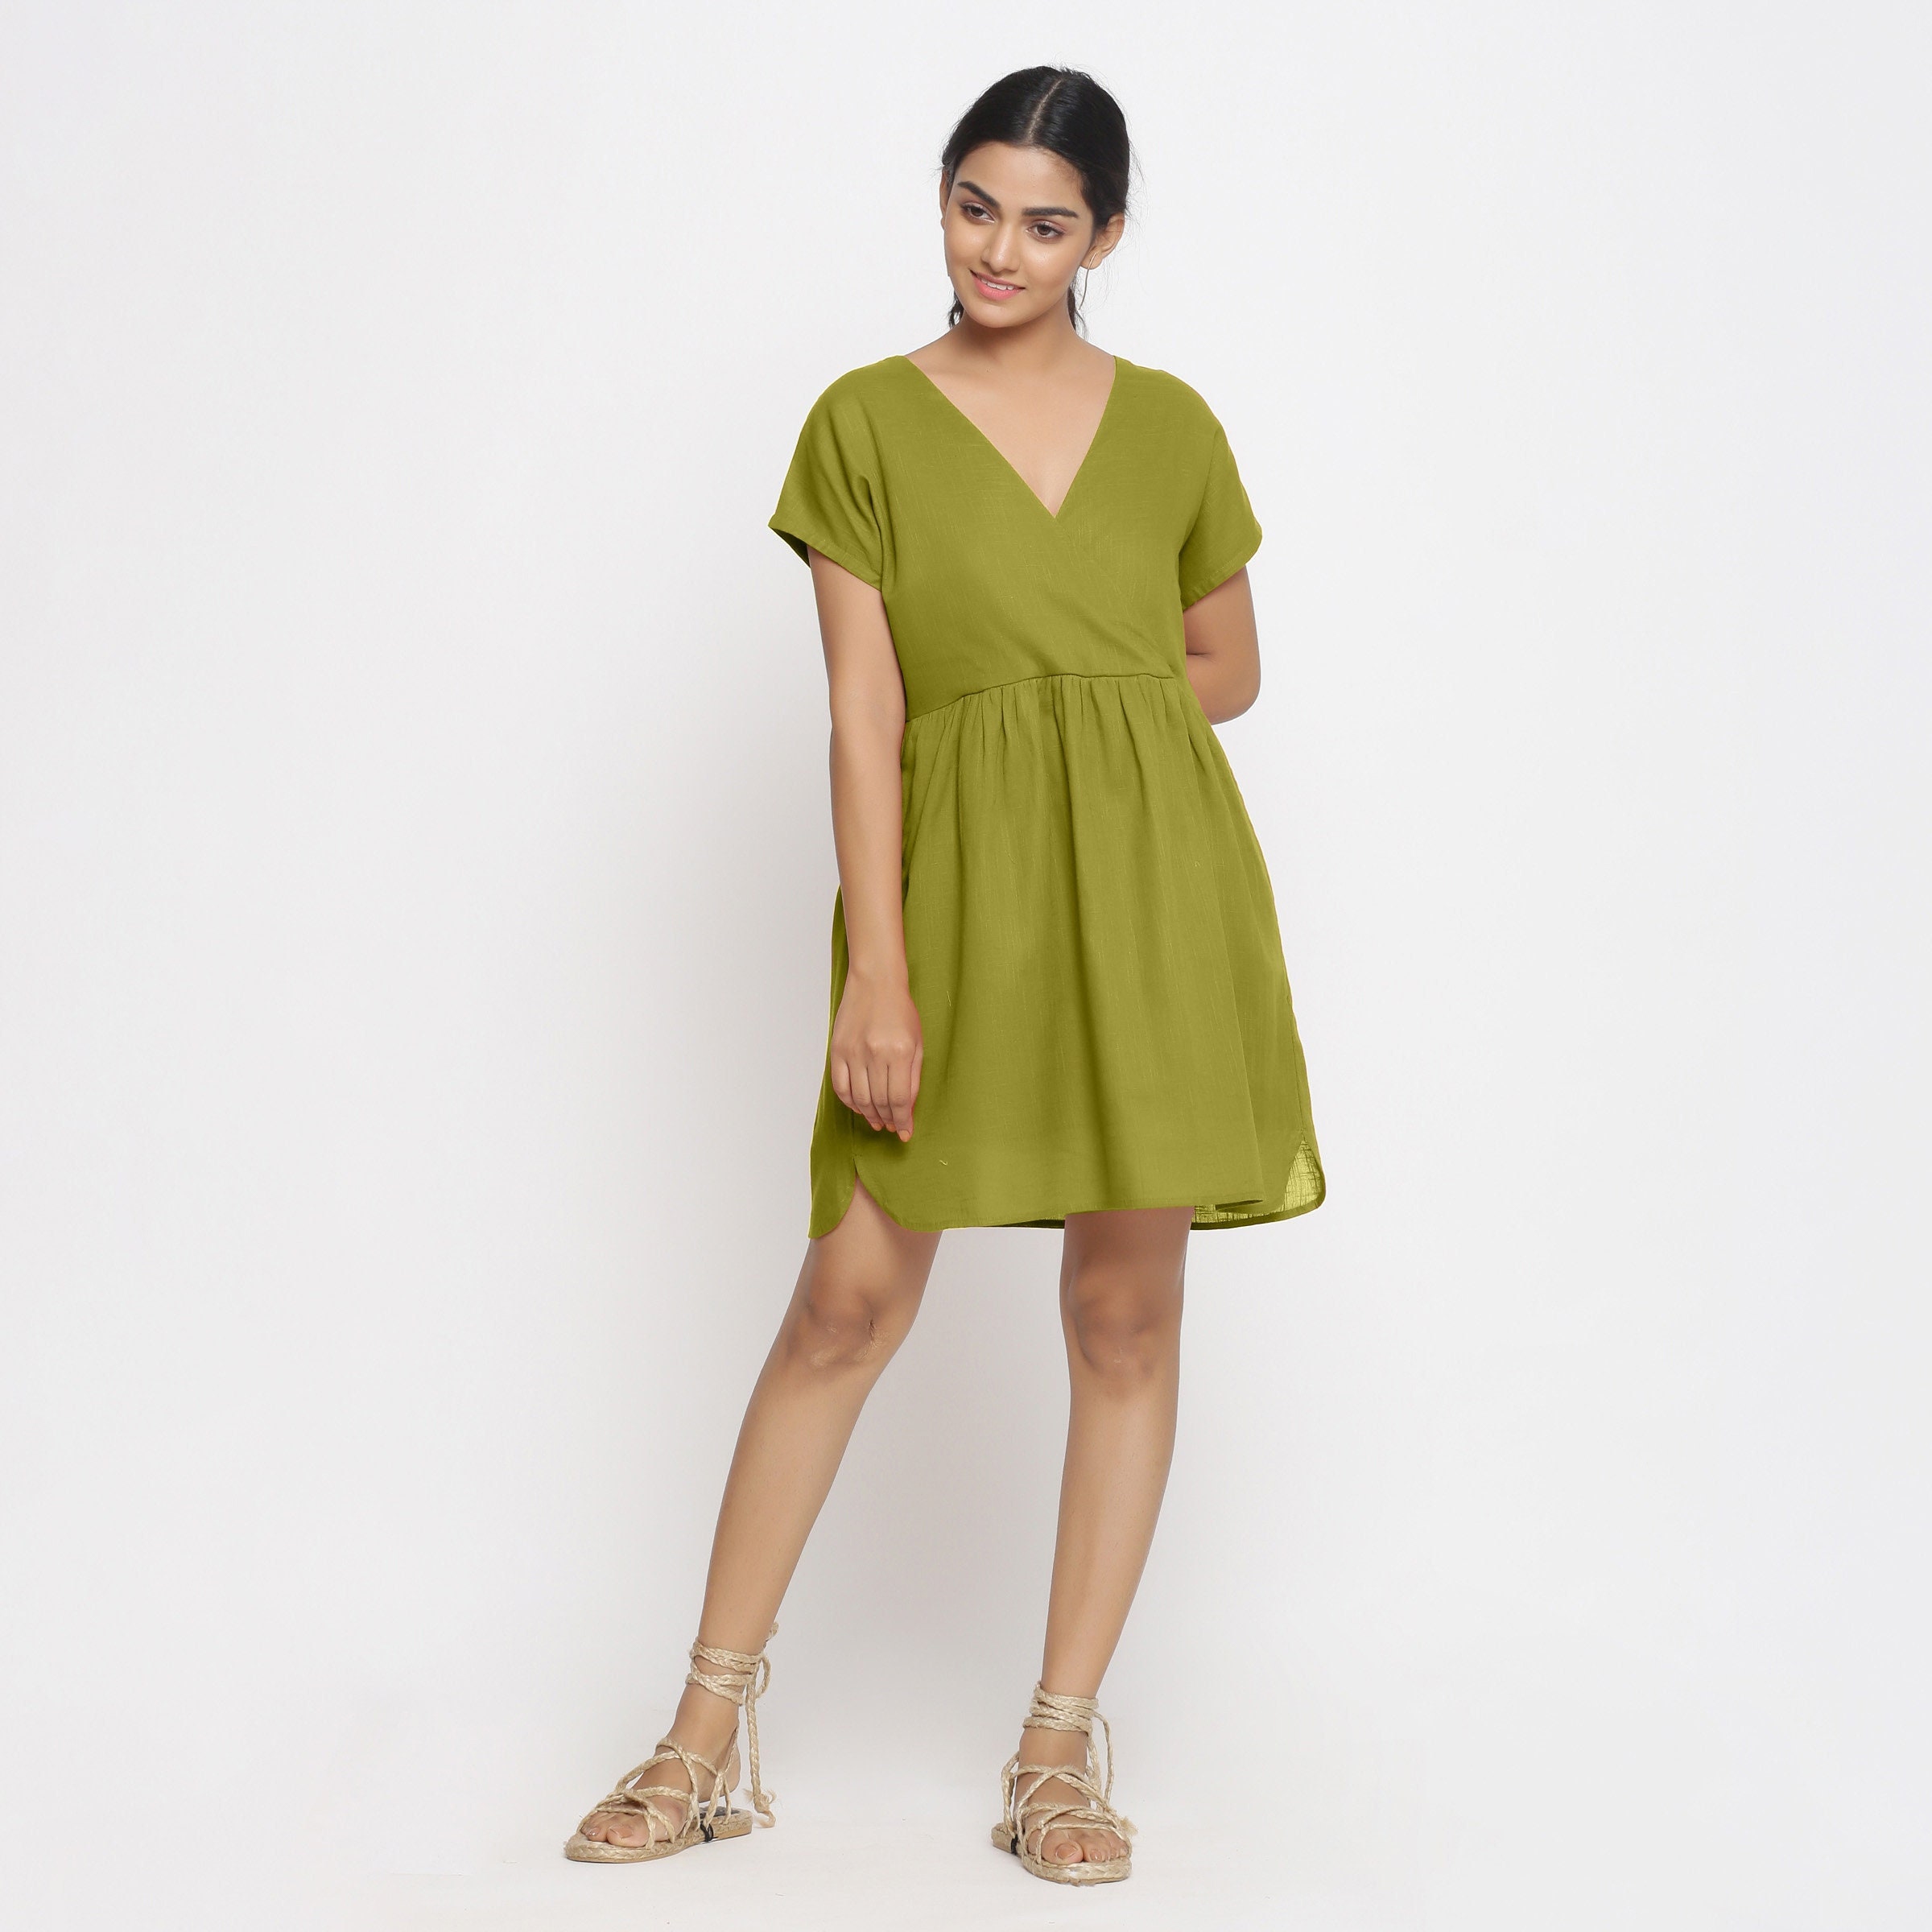 Olive Green 100% Cotton Short Dress, Customizable Dress for Women